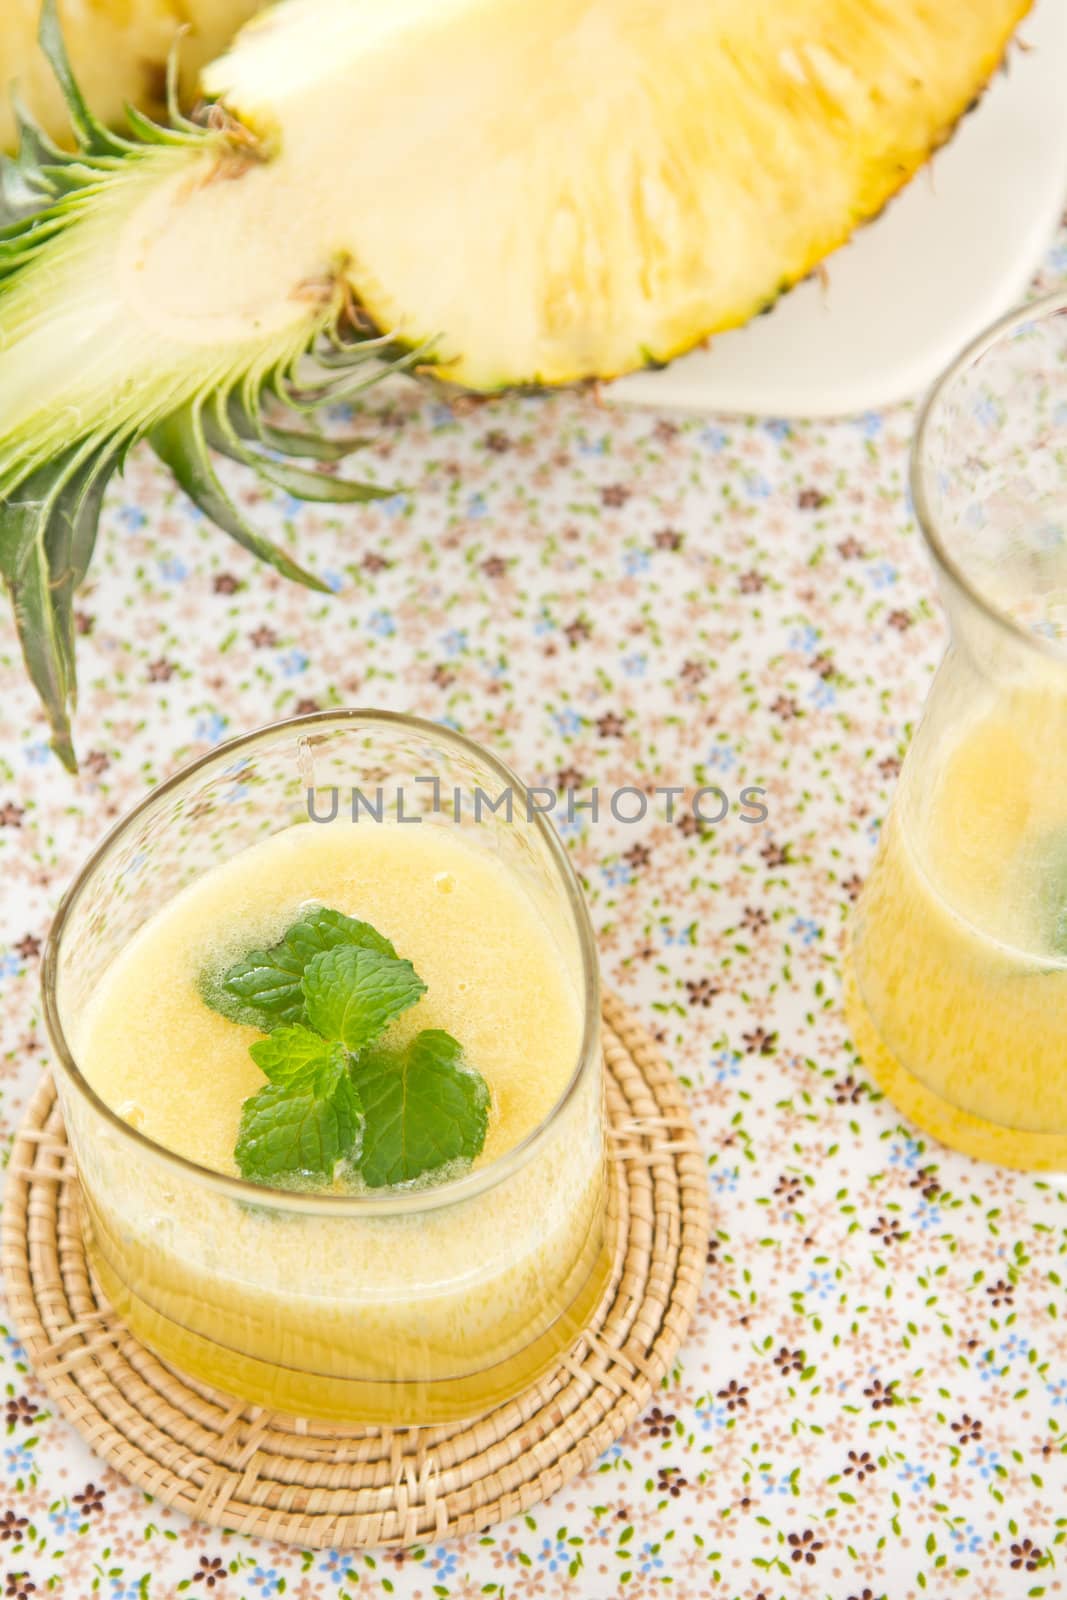 Pineapple juice by vanillaechoes